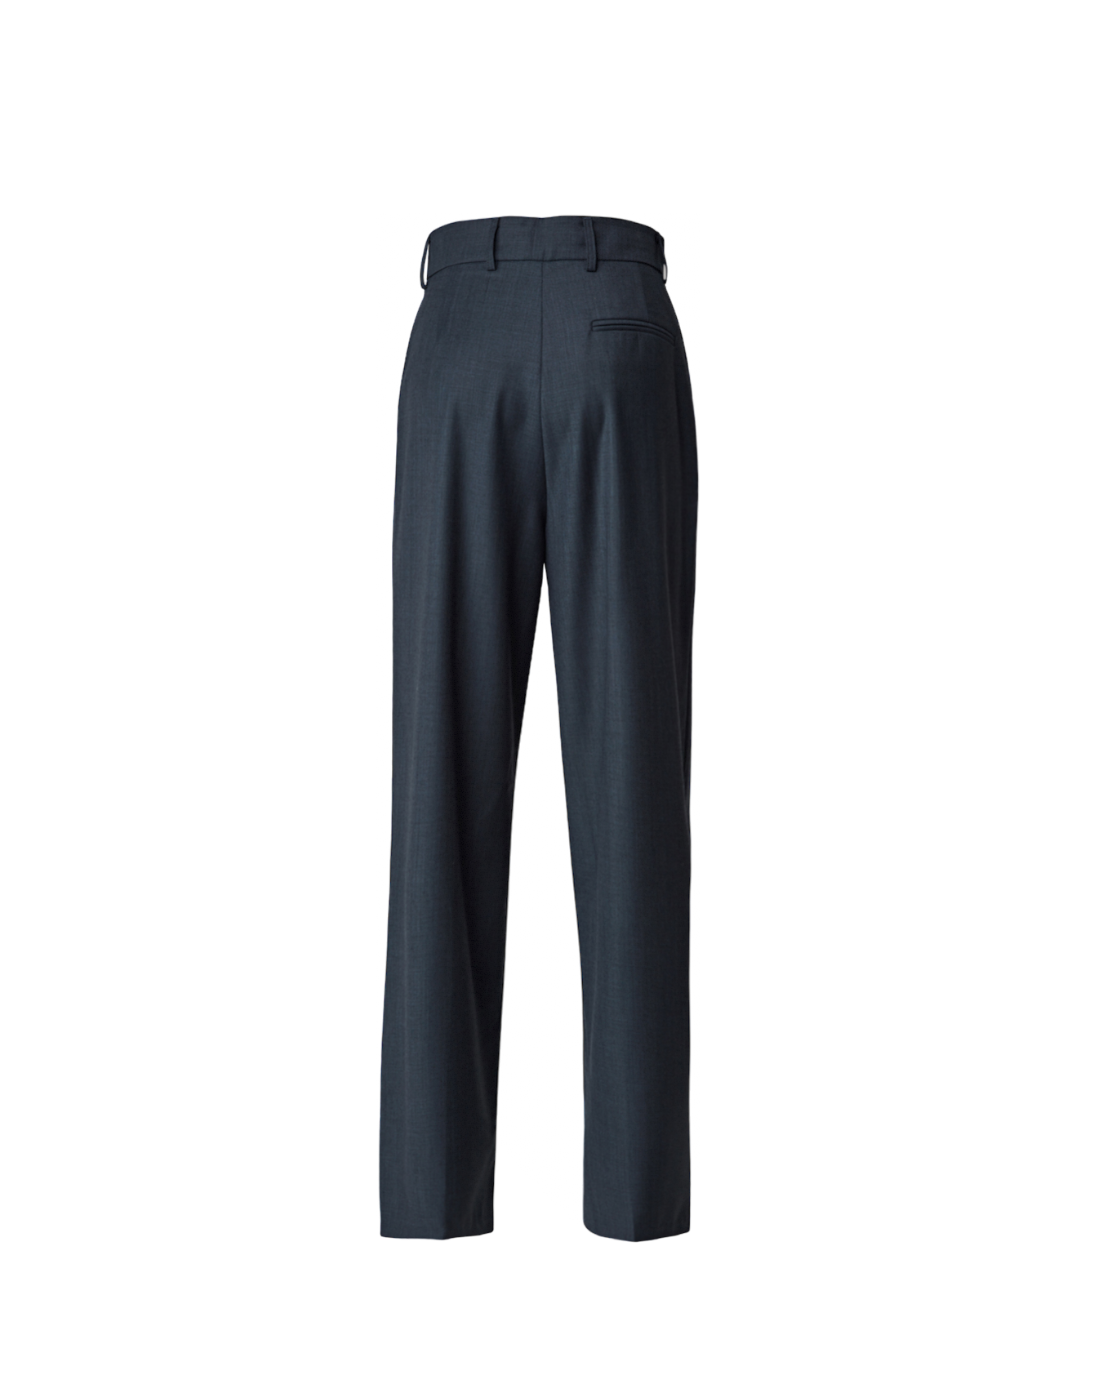 Basic Pintuck Pants in Navy